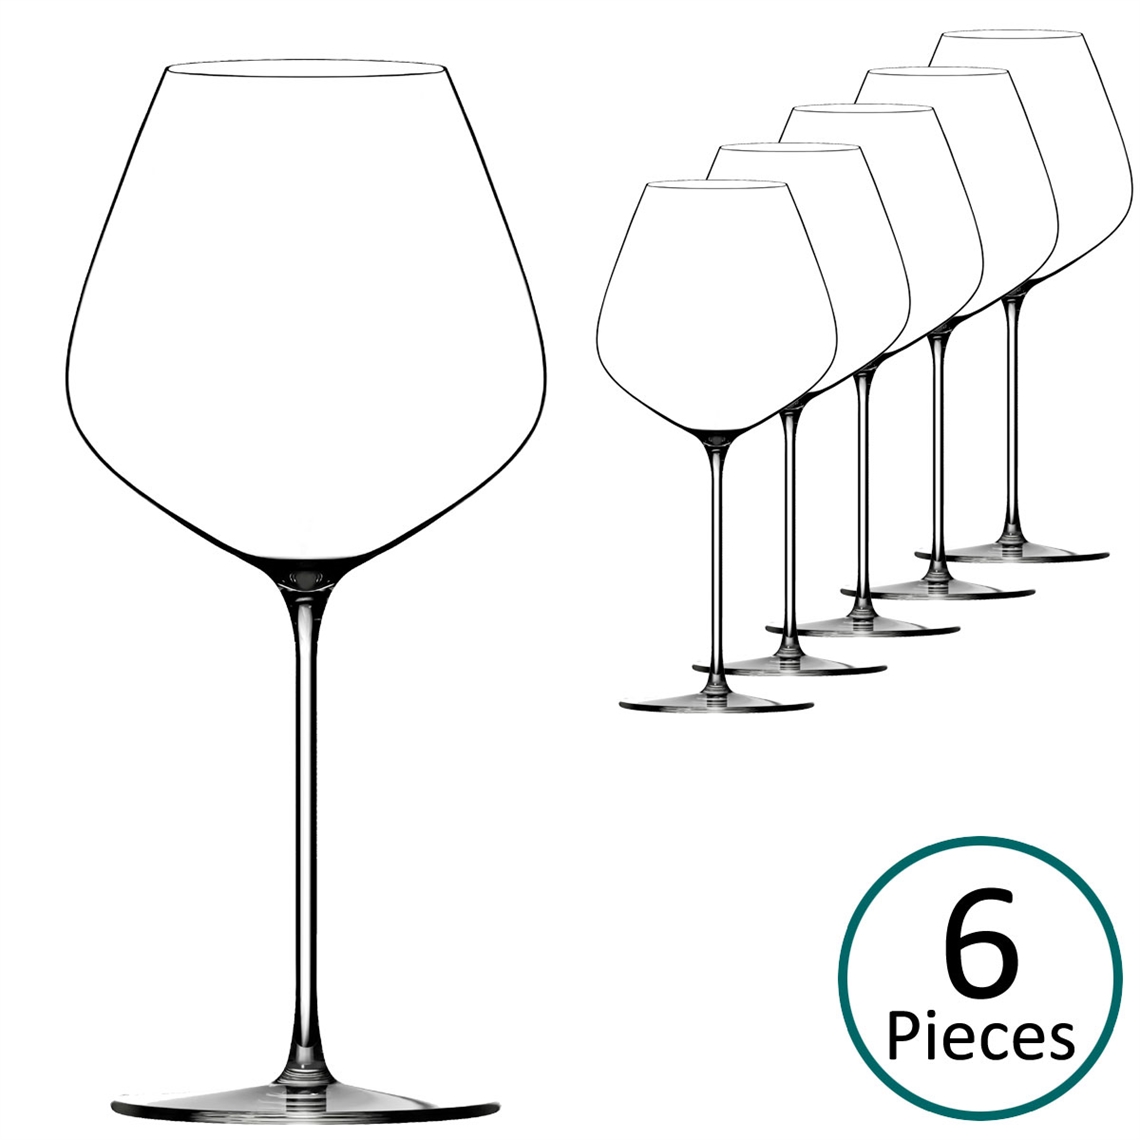 Lehmann Glass G.Basset Hommage Red Wine Glass 720ml - Set of 6